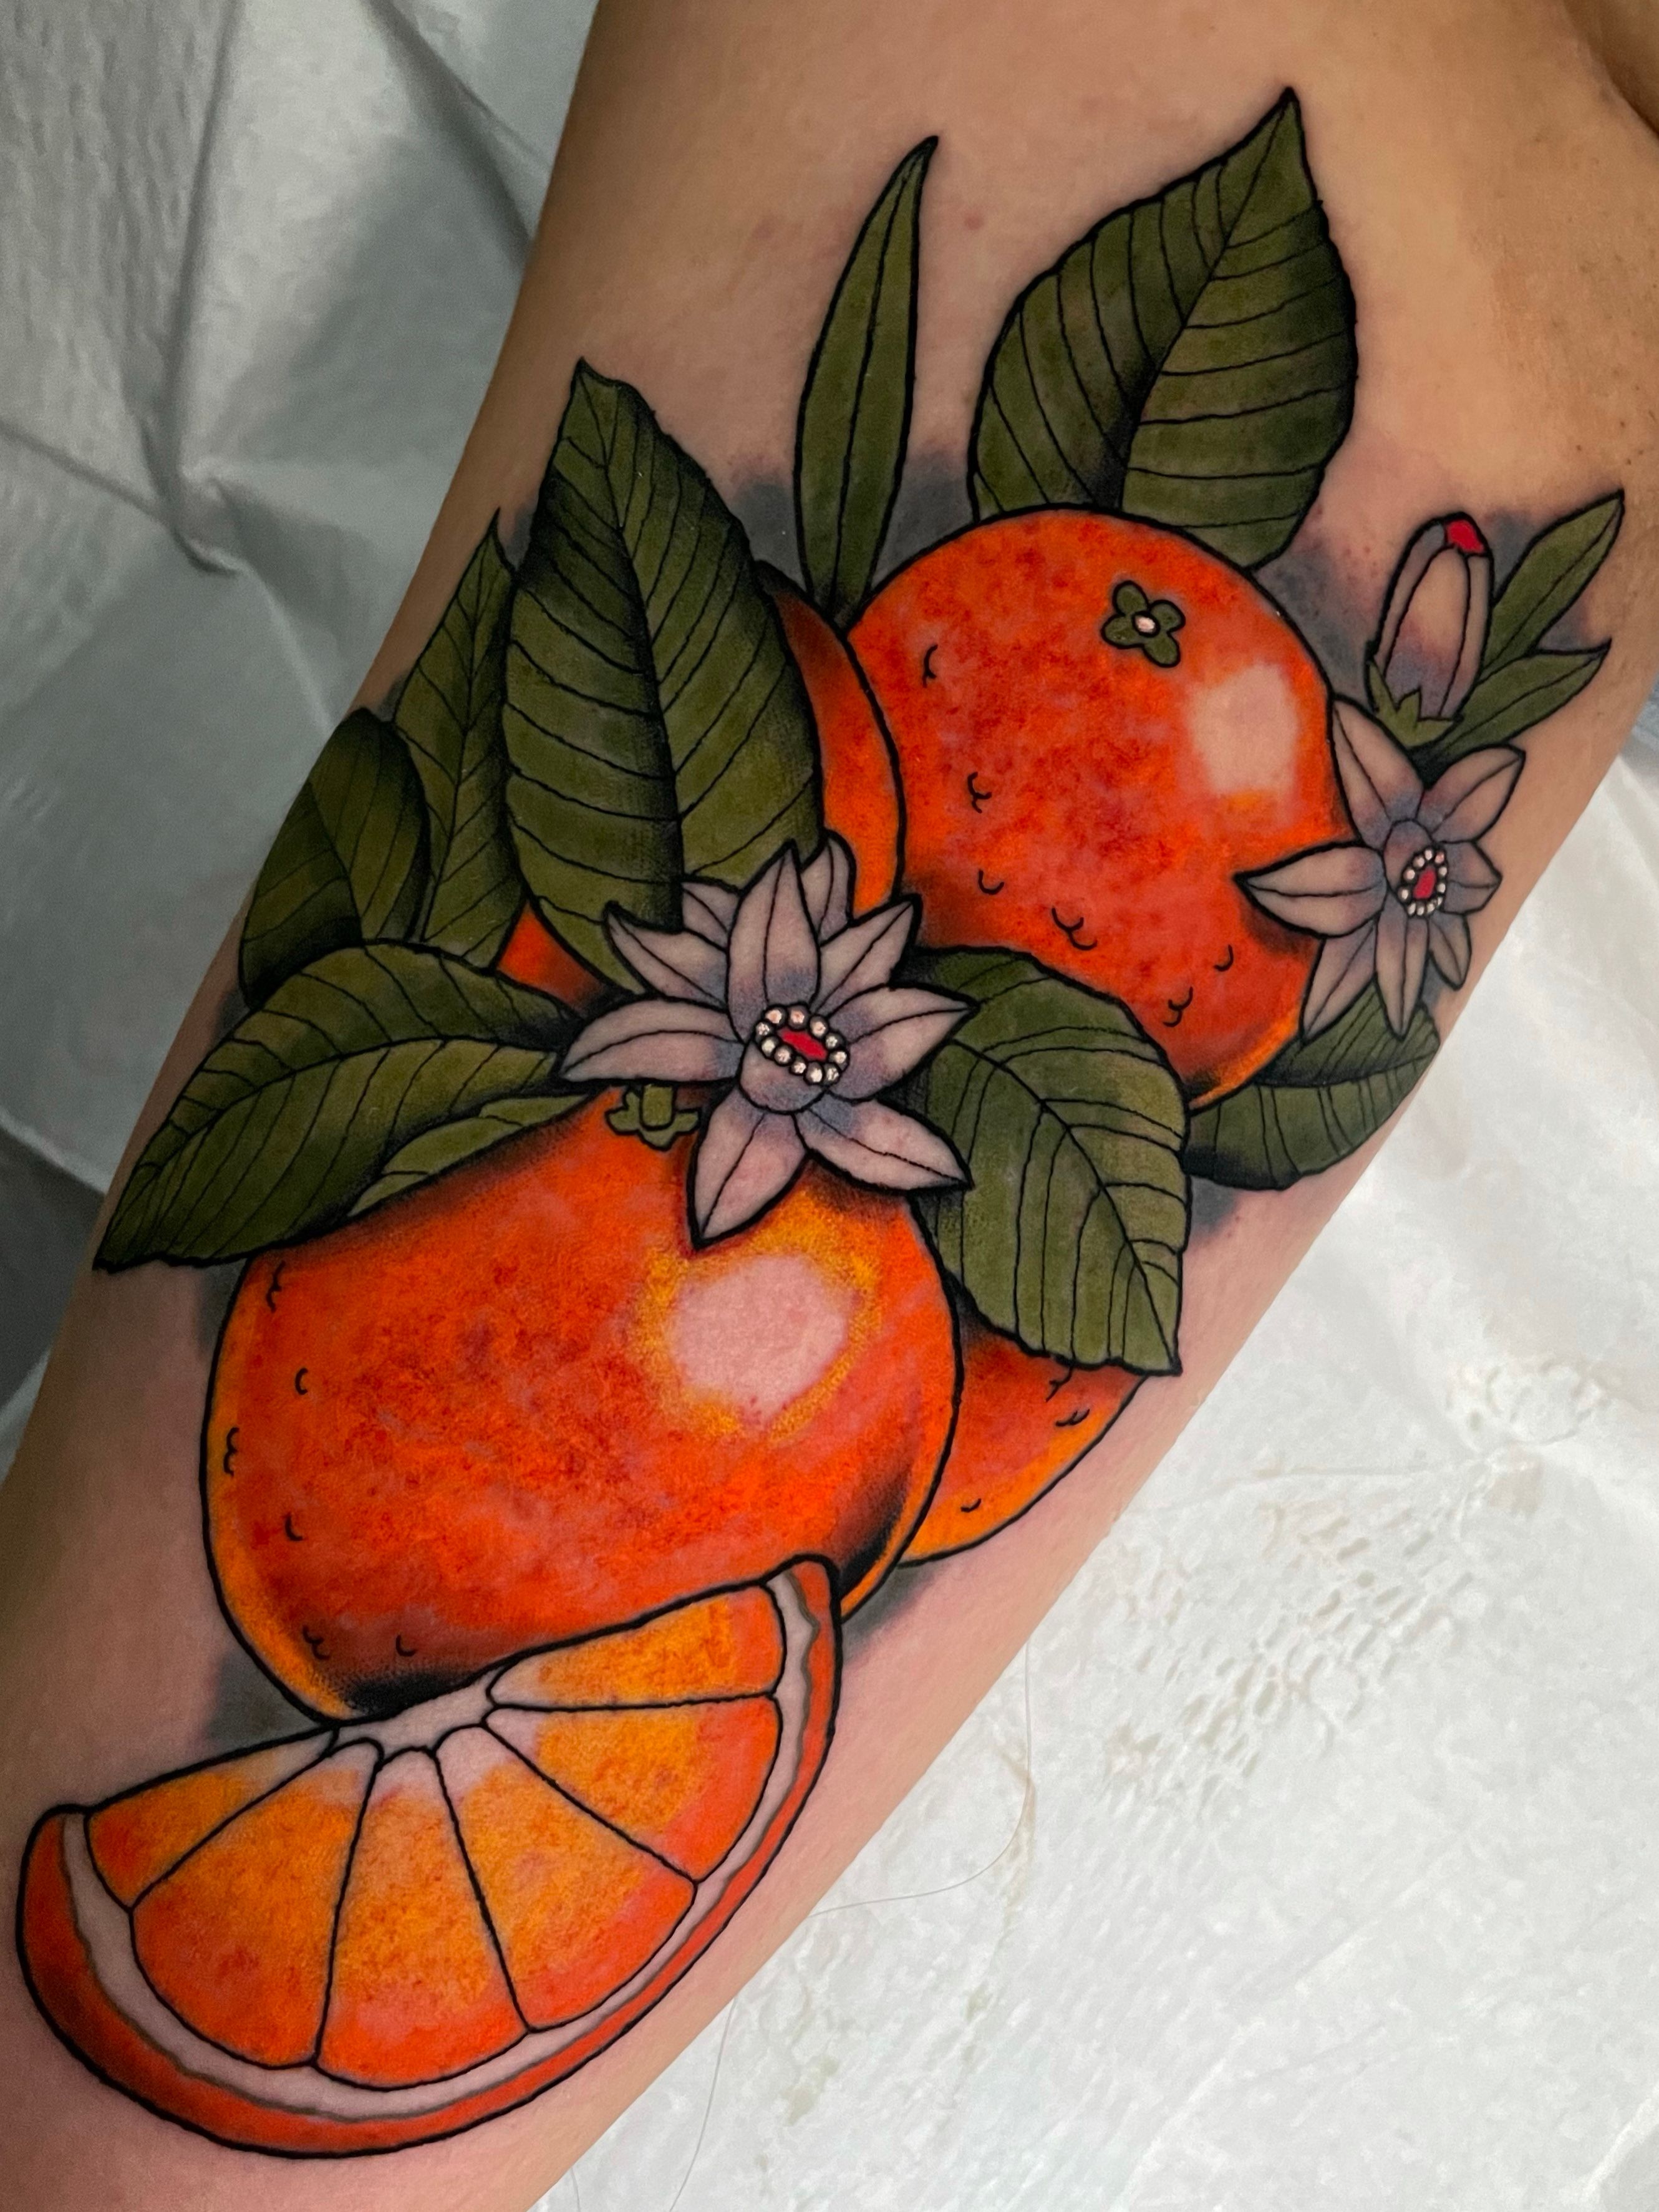 Paopu Fruit Tattoo? by roxas431 on DeviantArt